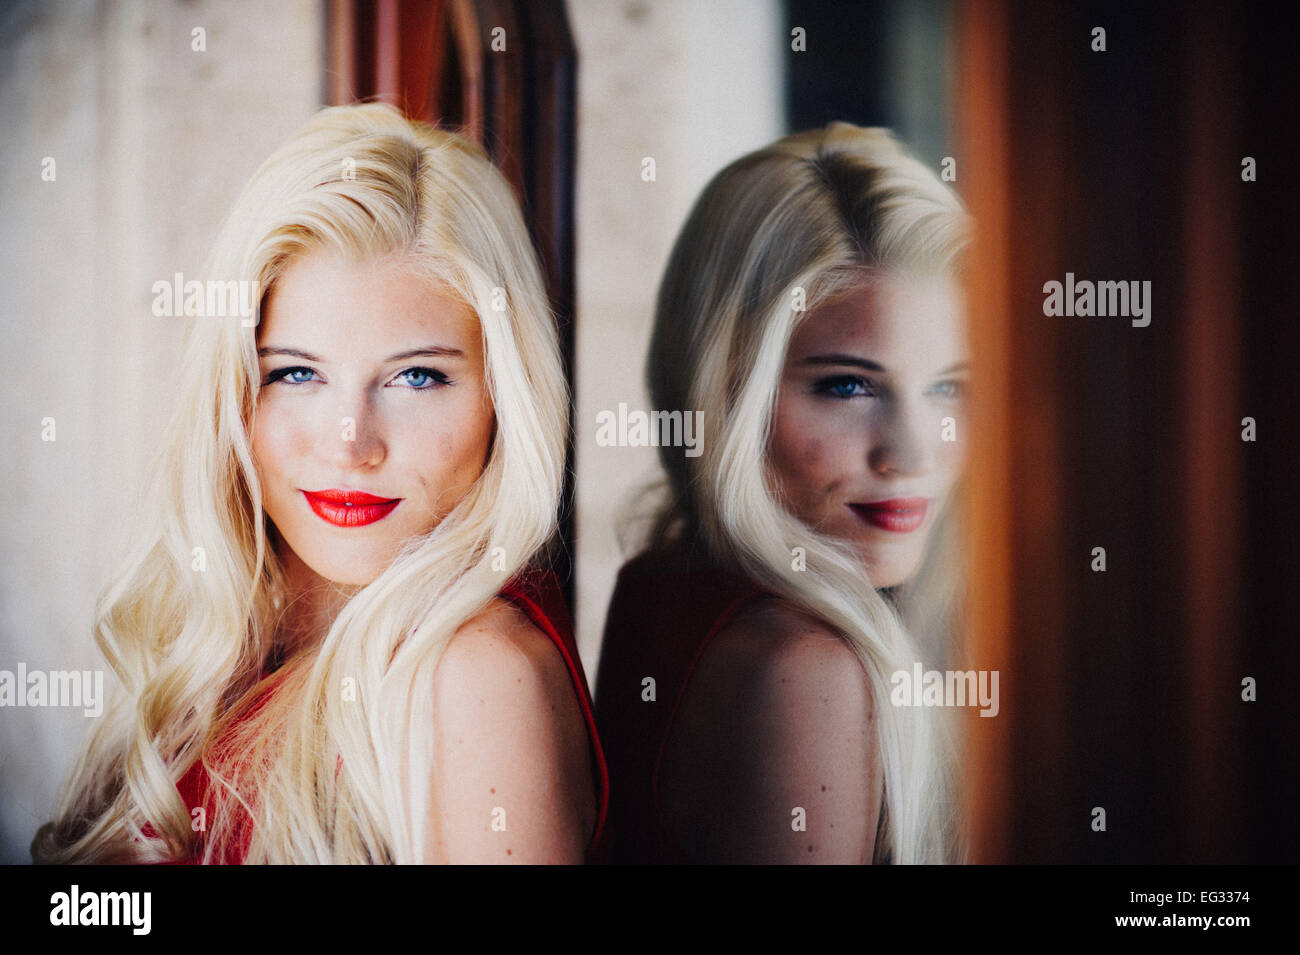 Frau beauty model celine -Fotos und -Bildmaterial in hoher Auflösung – Alamy